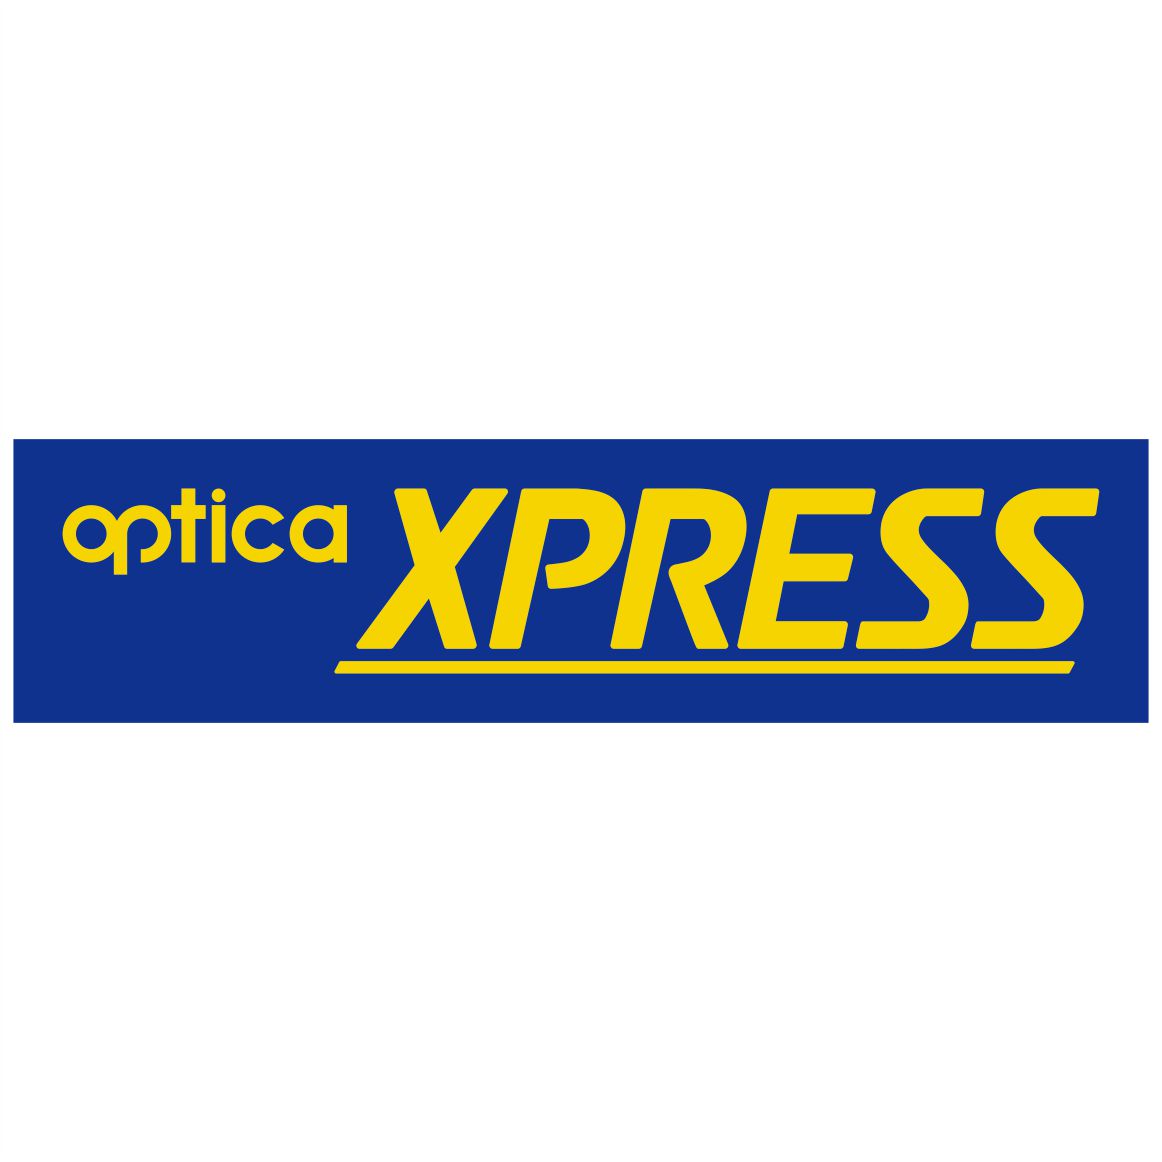 optica xpress Logo PNG Vector Gratis